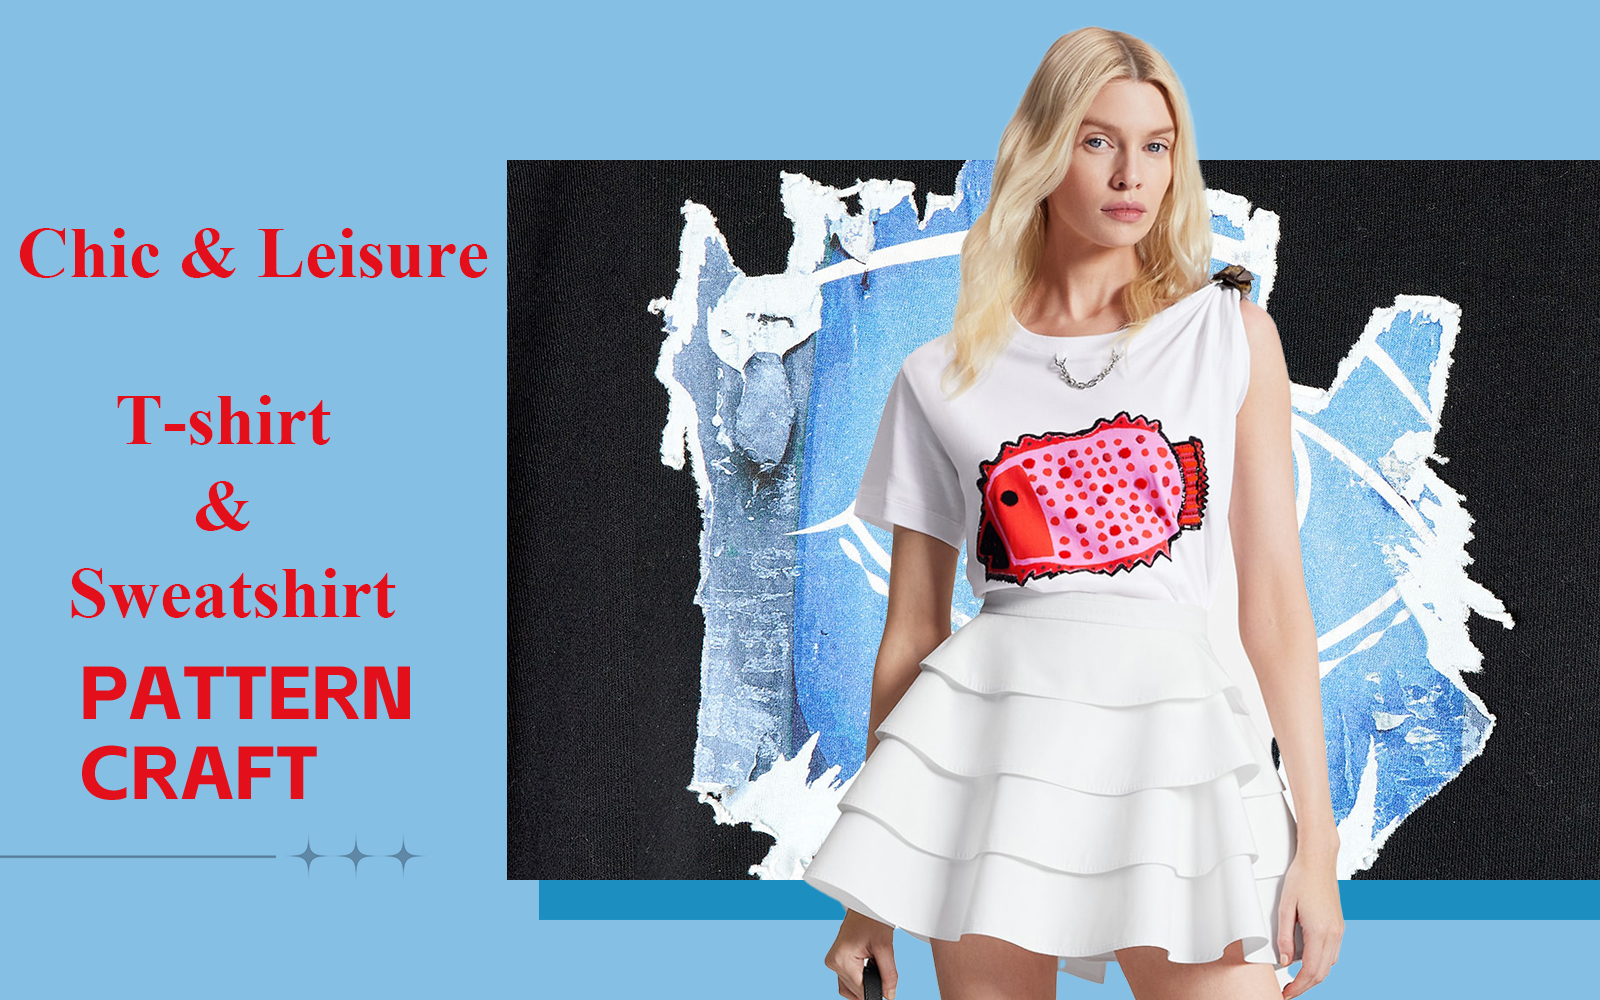 Chic & Leisure -- The Pattern Craft Trend for T-shirt & Sweatshirt